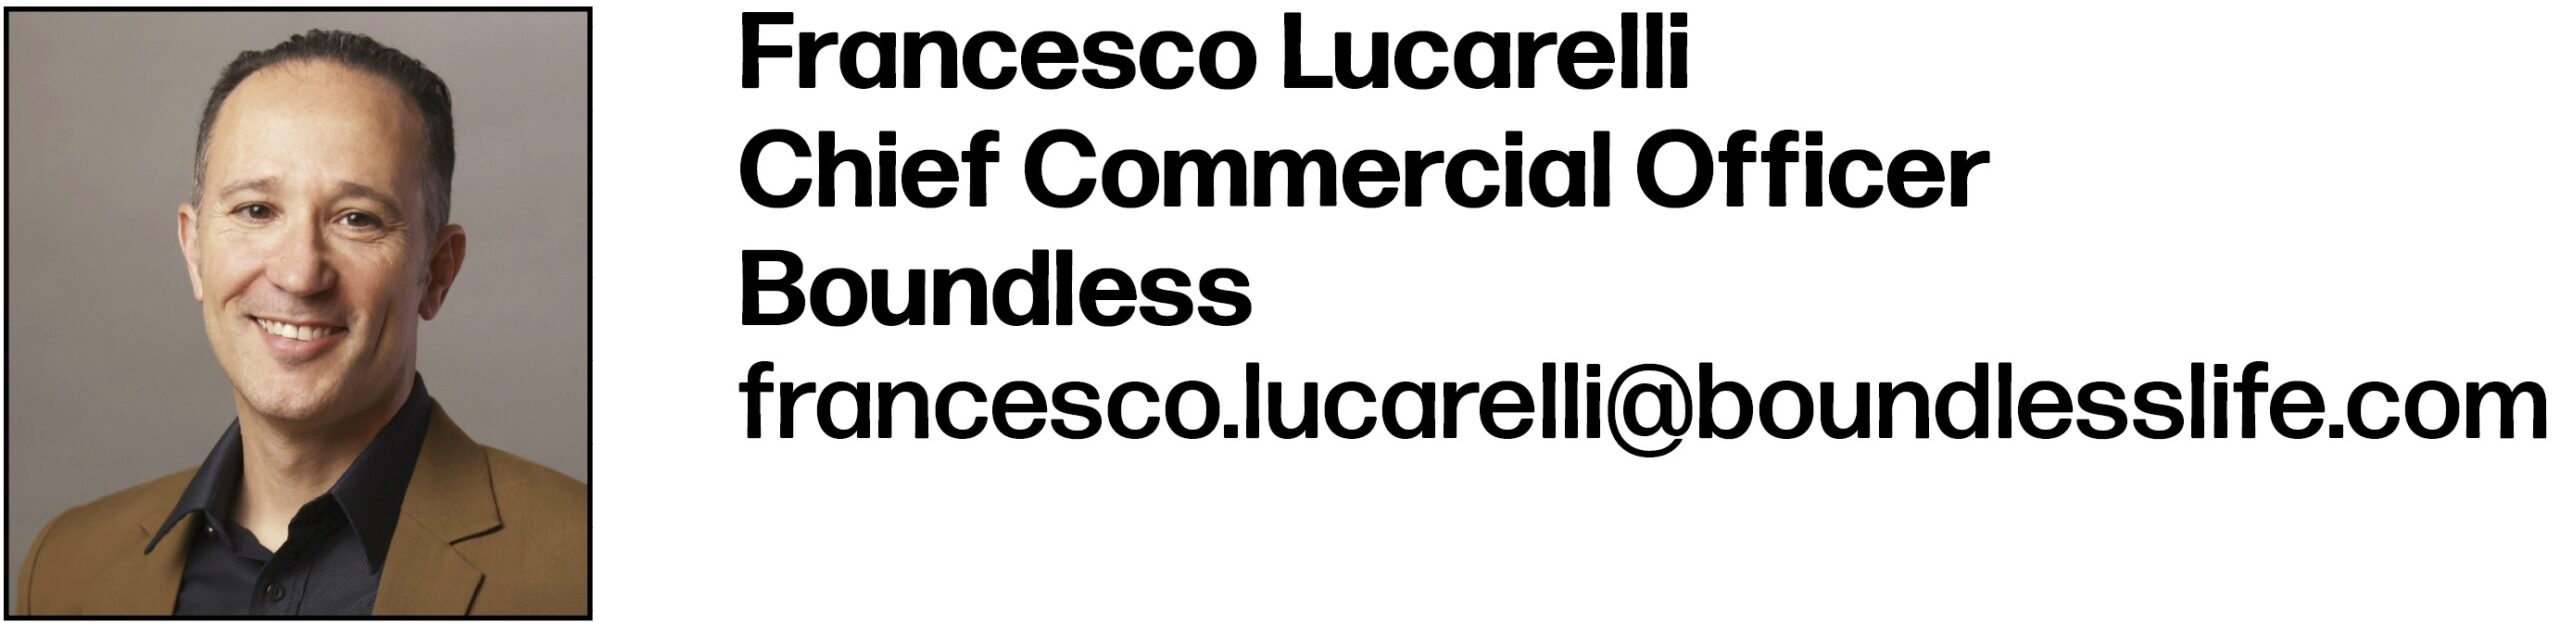 Francesco Lucarelli Chief Commercial Officer Boundless francesco.lucarelli@boundlesslife.com 